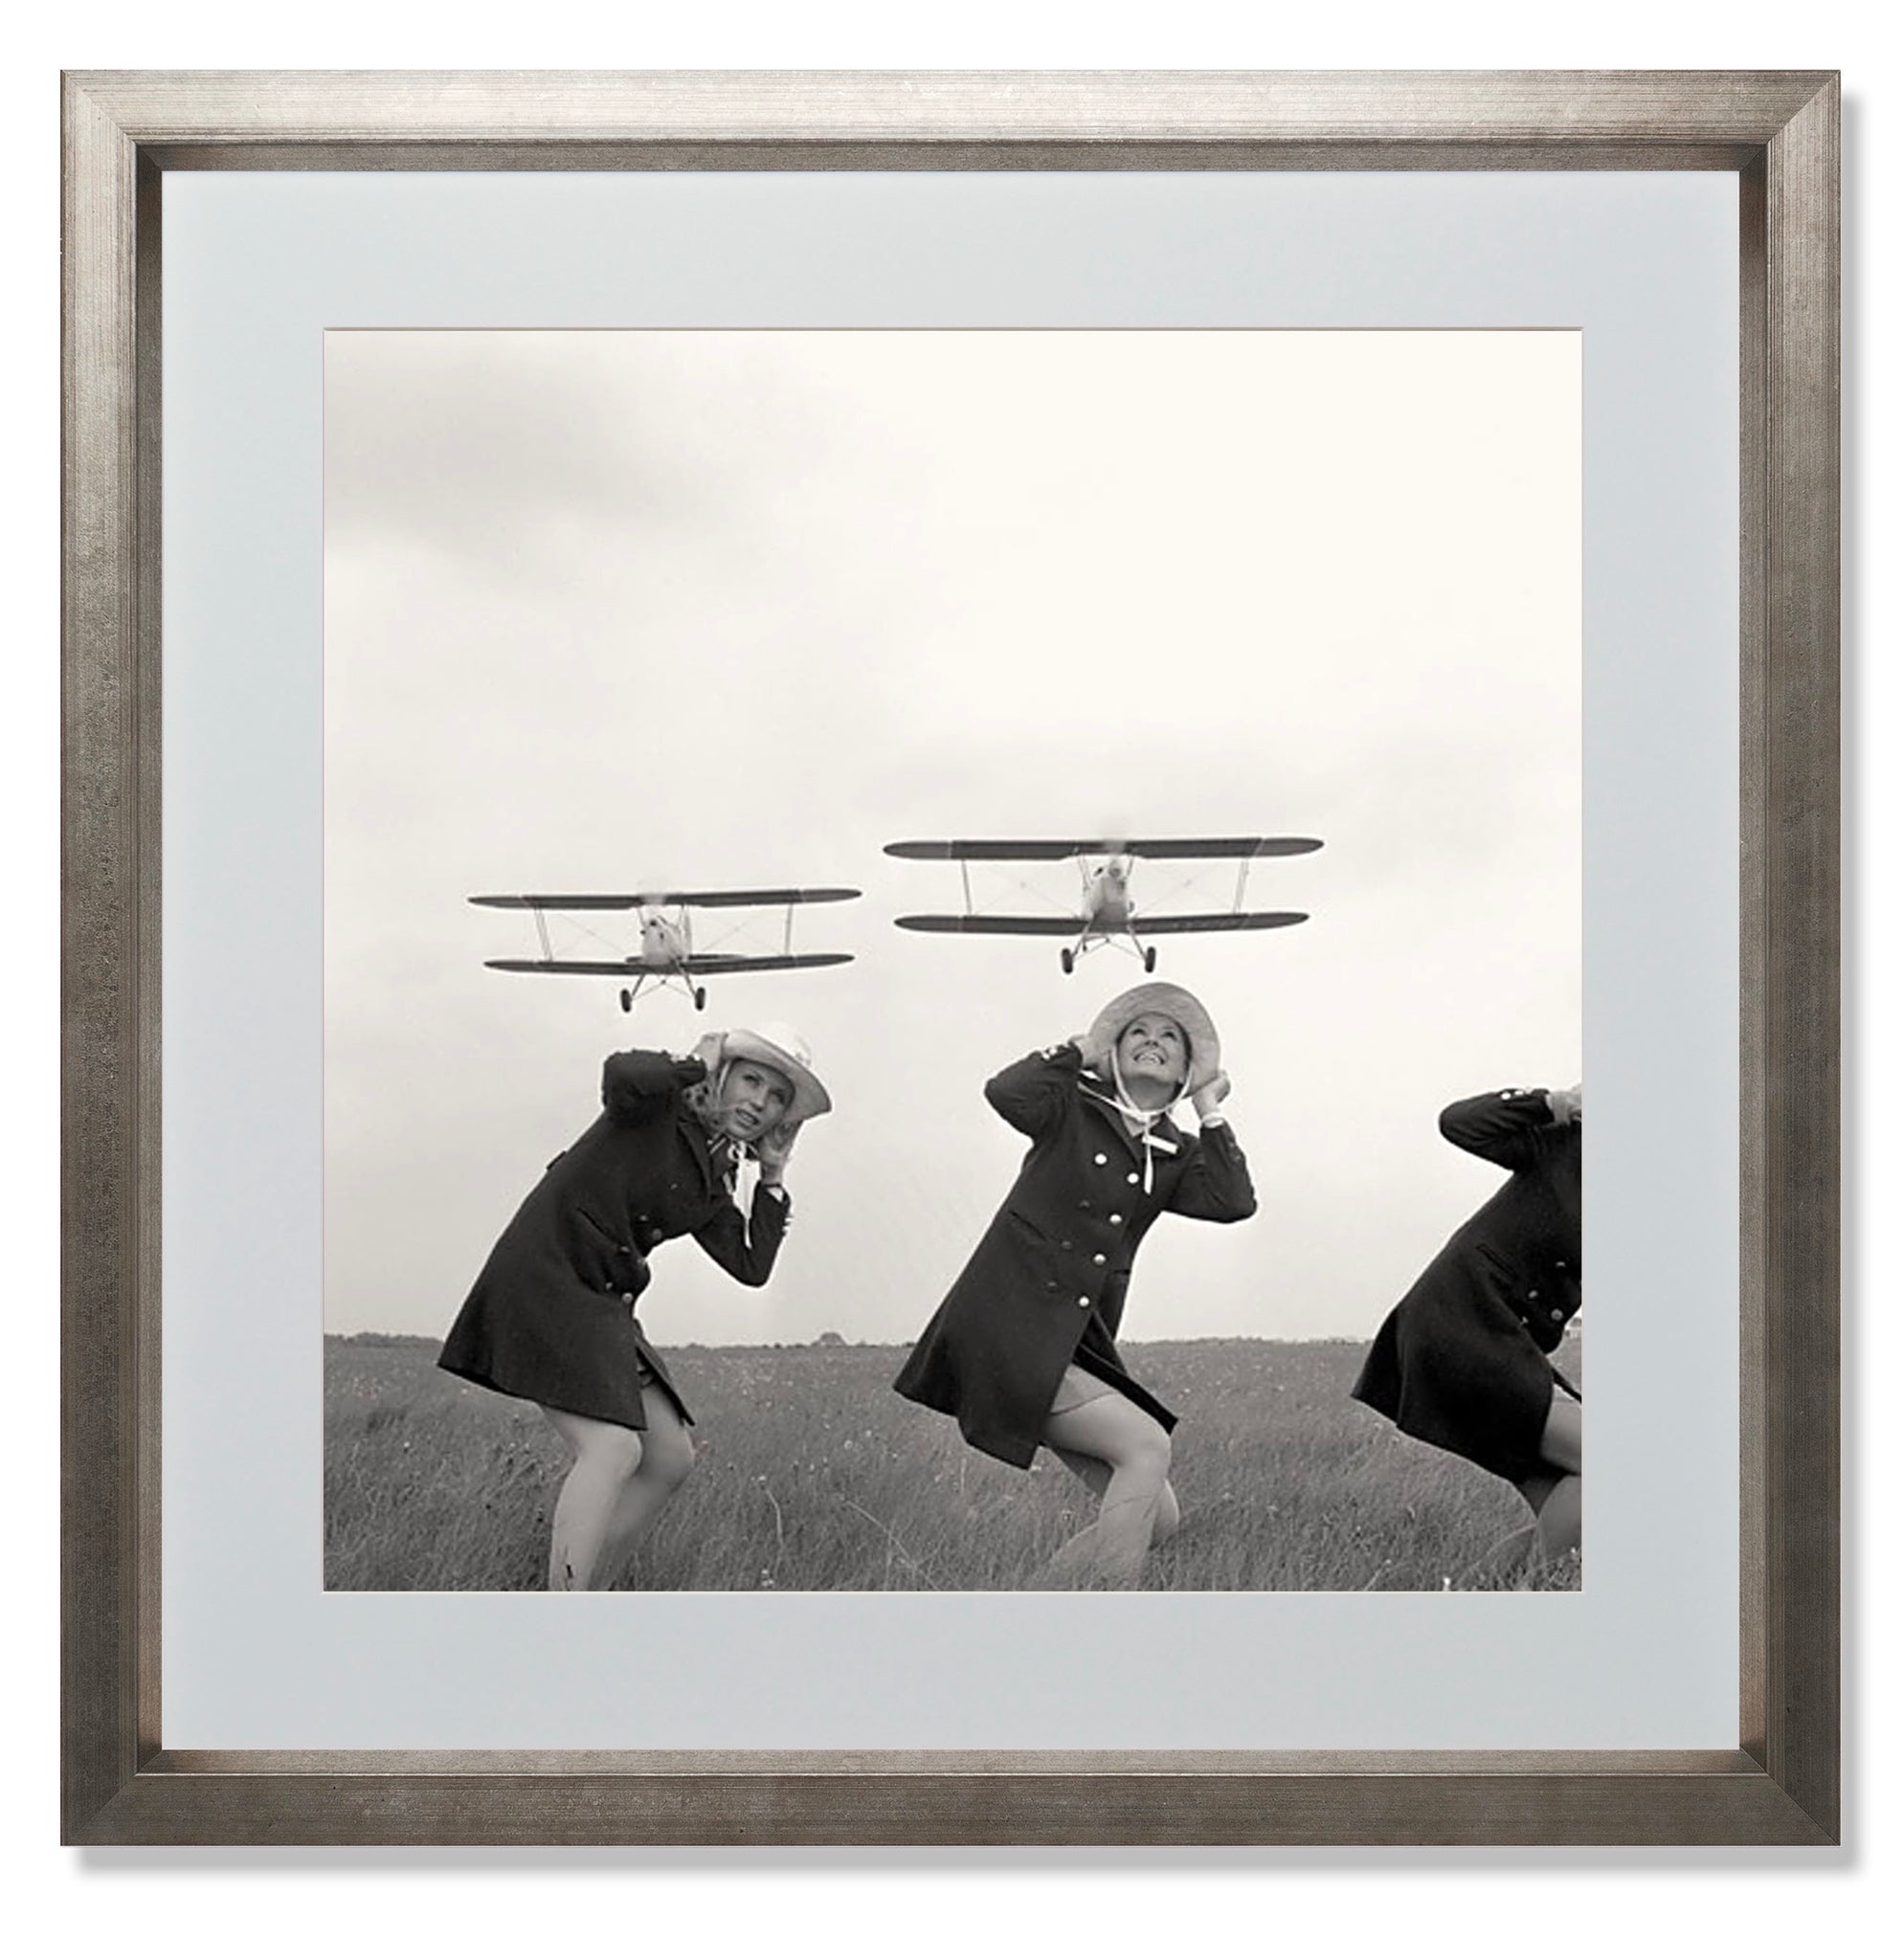 Rothman's Biplanes